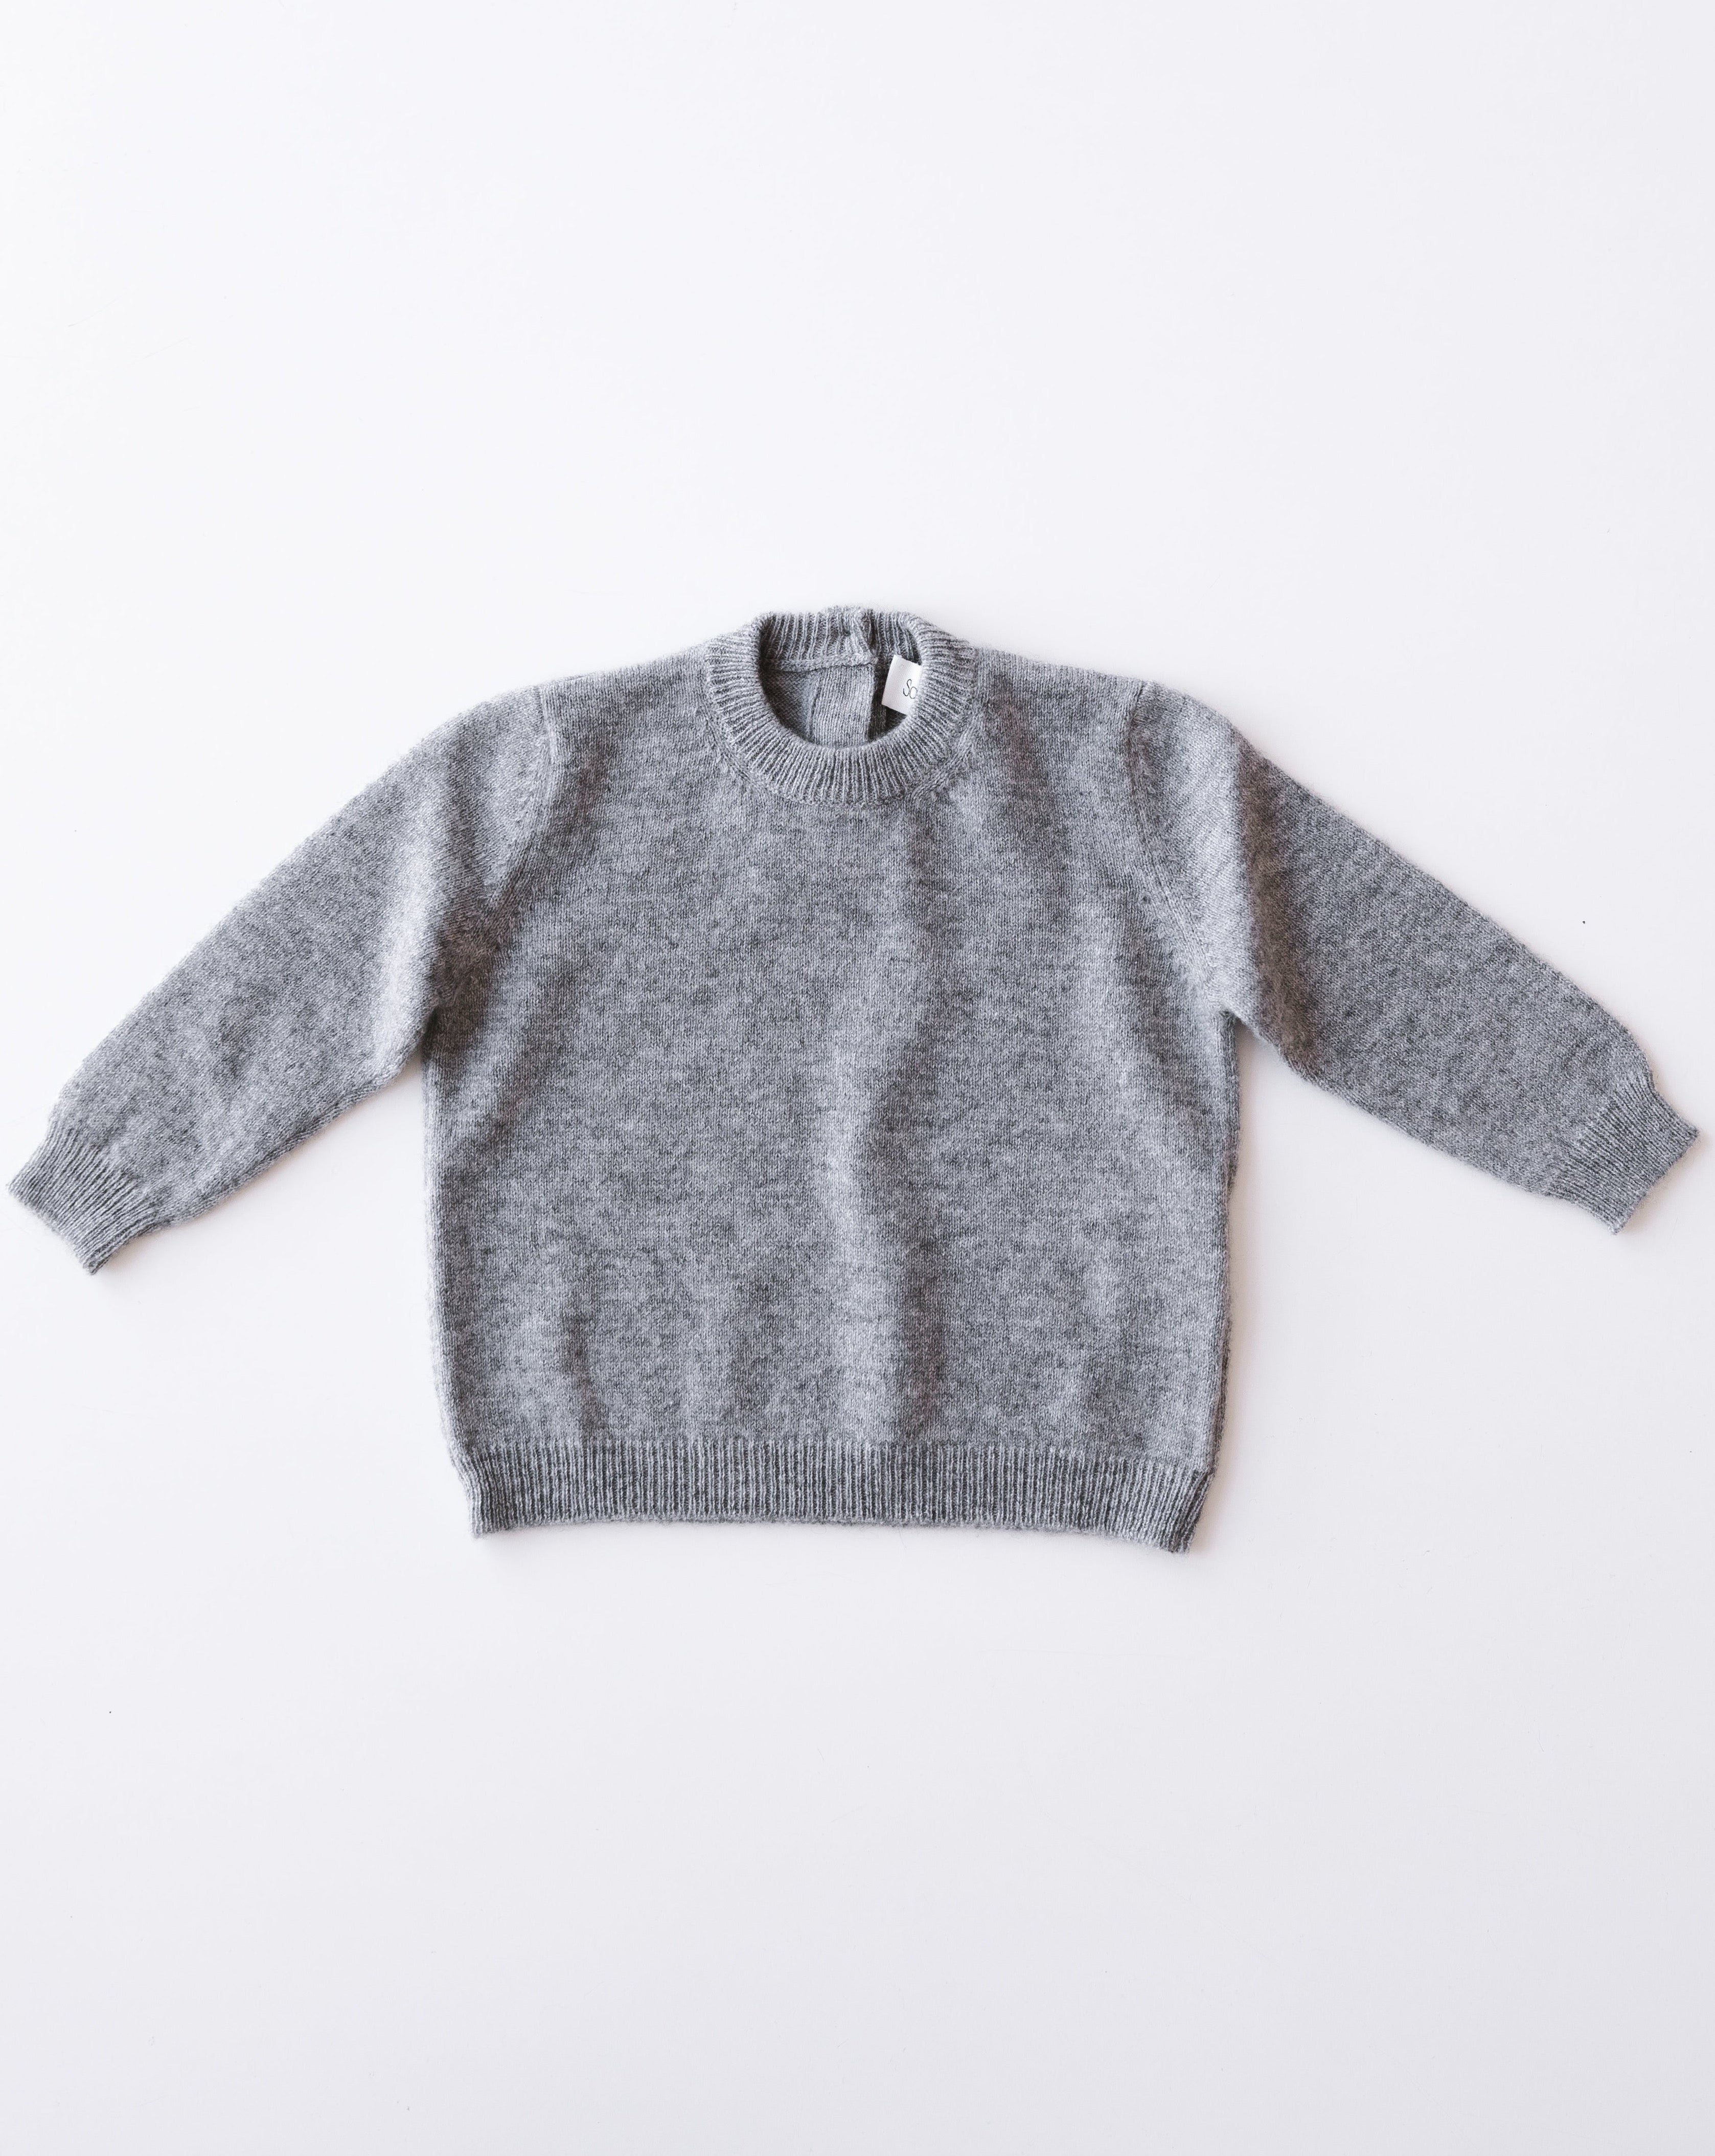 Baby Cashmere Sweater - Heather Grey